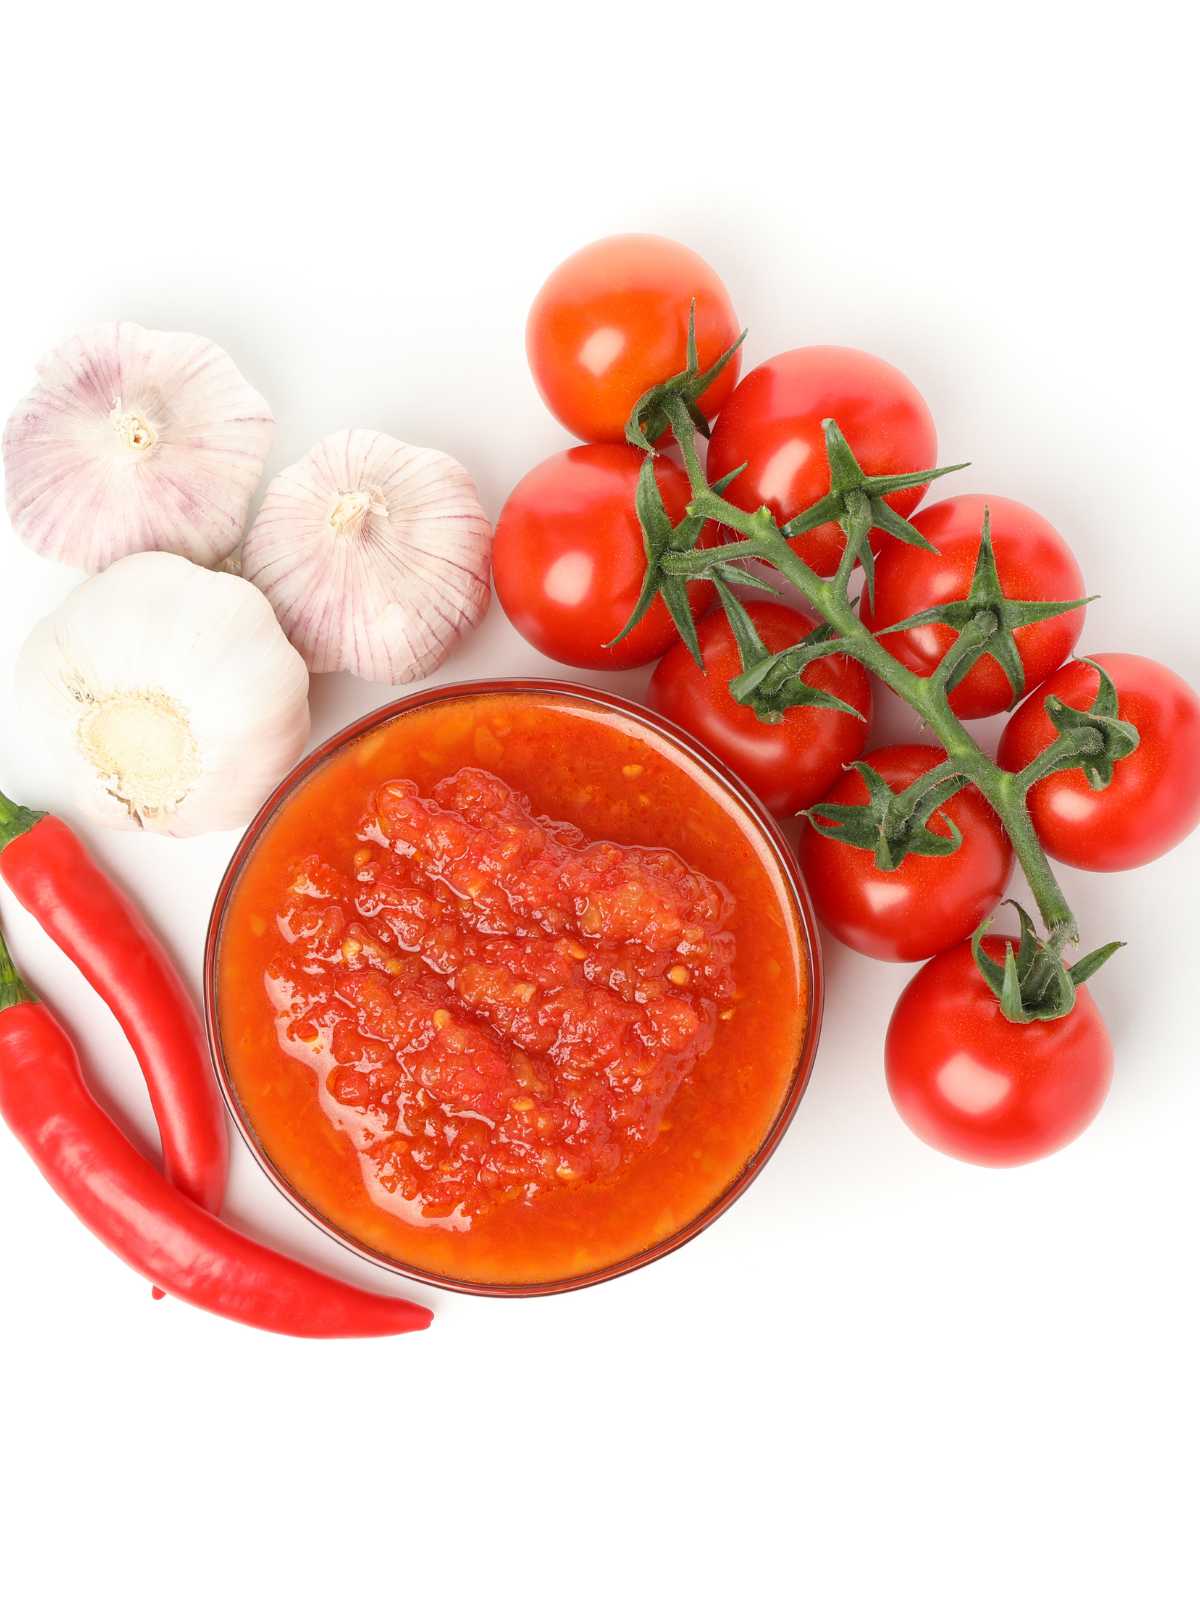 How to Make Homemade Tomato Paste